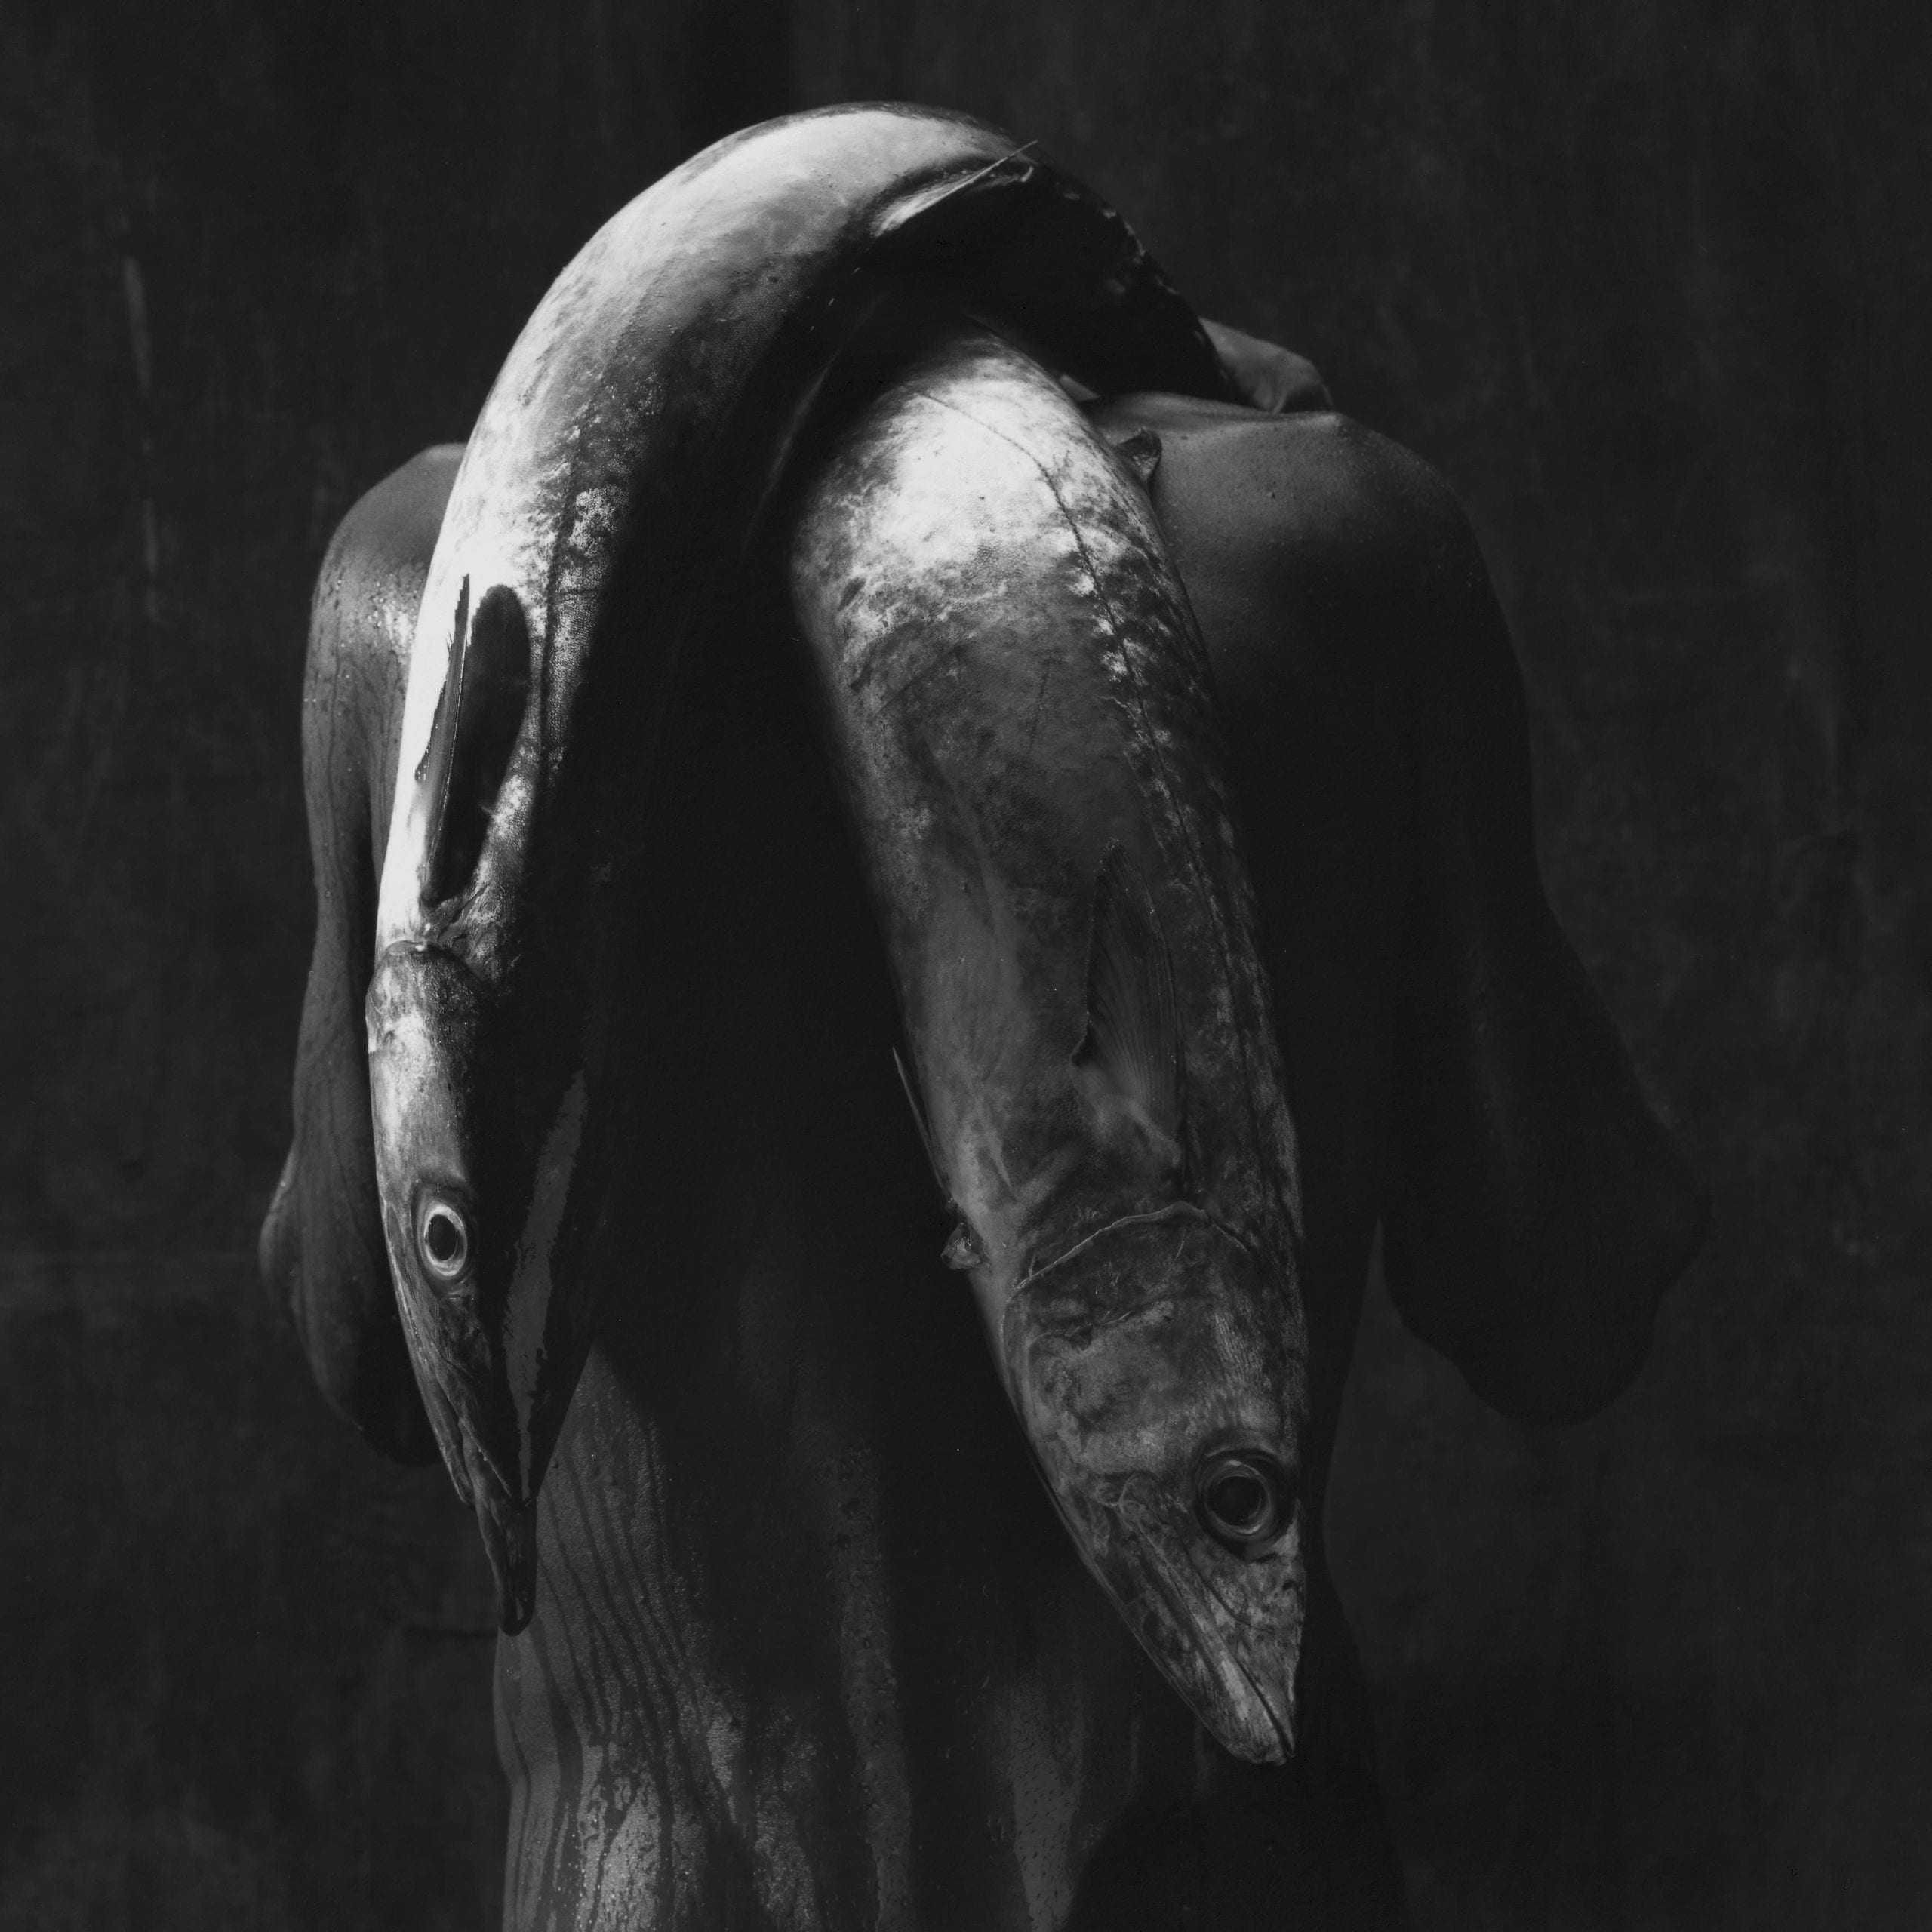 Homem com dois peixes, 1992 [Man with two fish] © Instituto Mario Cravo Neto/ Instituto Moreira Salles, courtesy of Daros Latinamerica Collection, Zürich